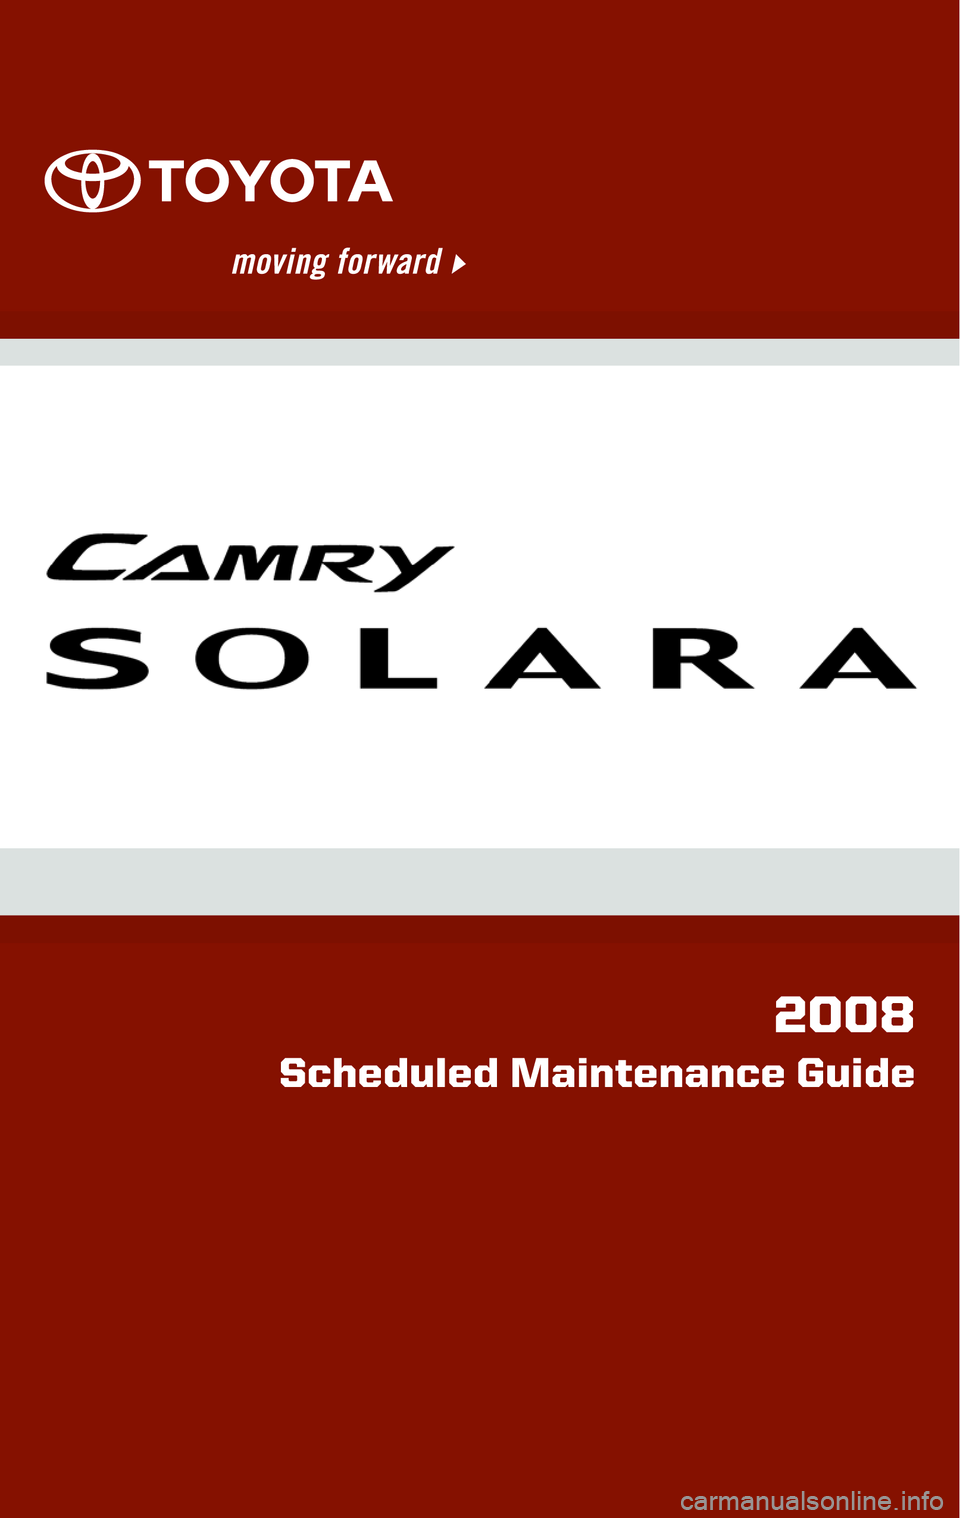 TOYOTA SOLARA 2008  Warranties & Maintenance Guides (in English) 
2008
Scheduled Maintenance Guide    